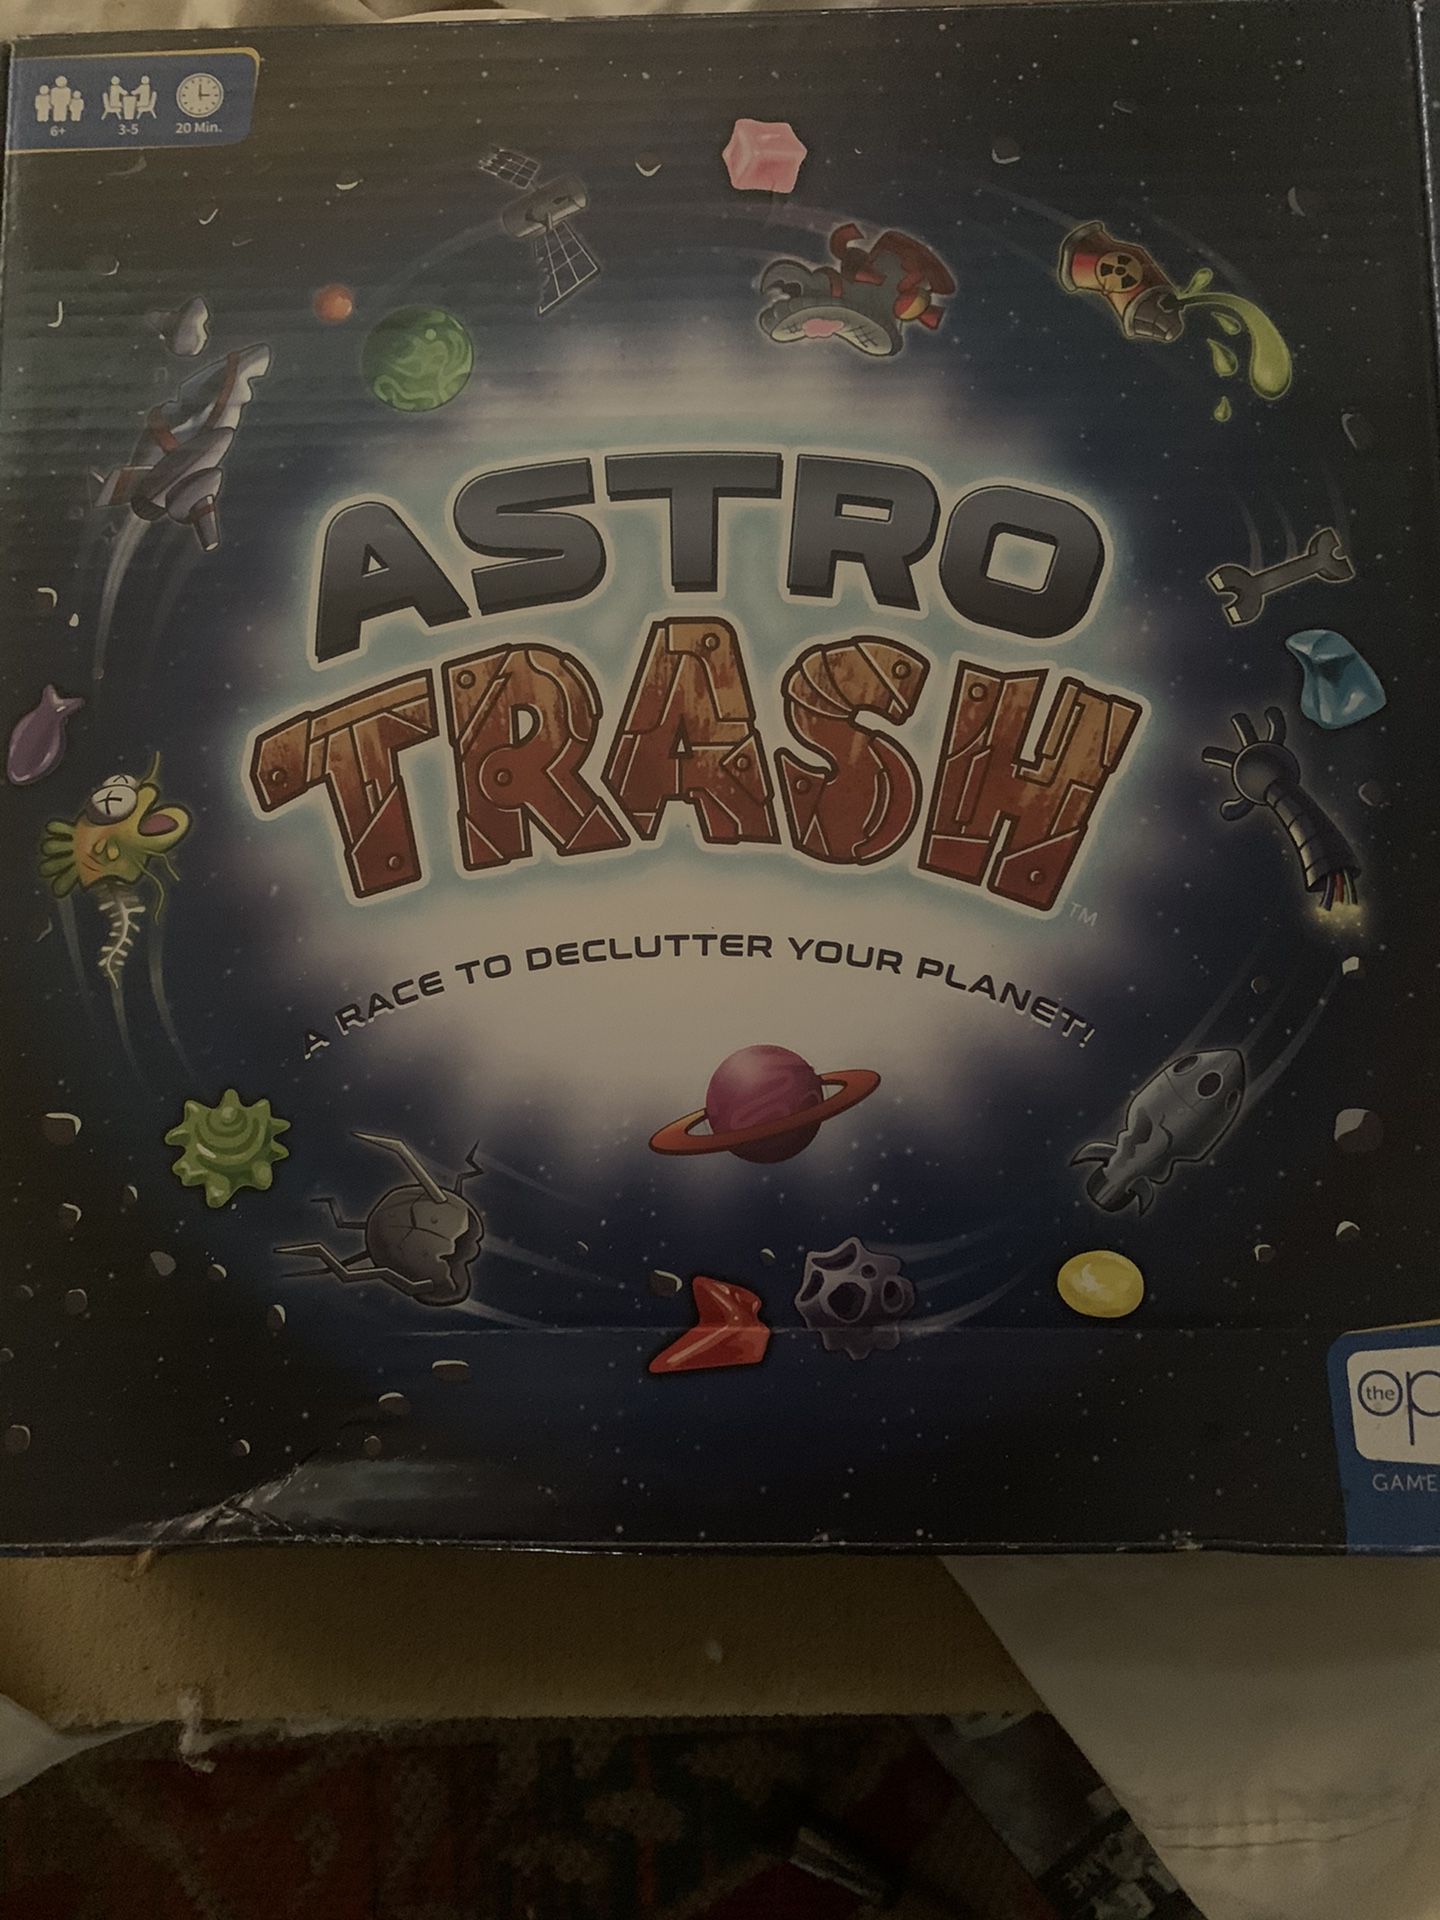 Astro trash fun game